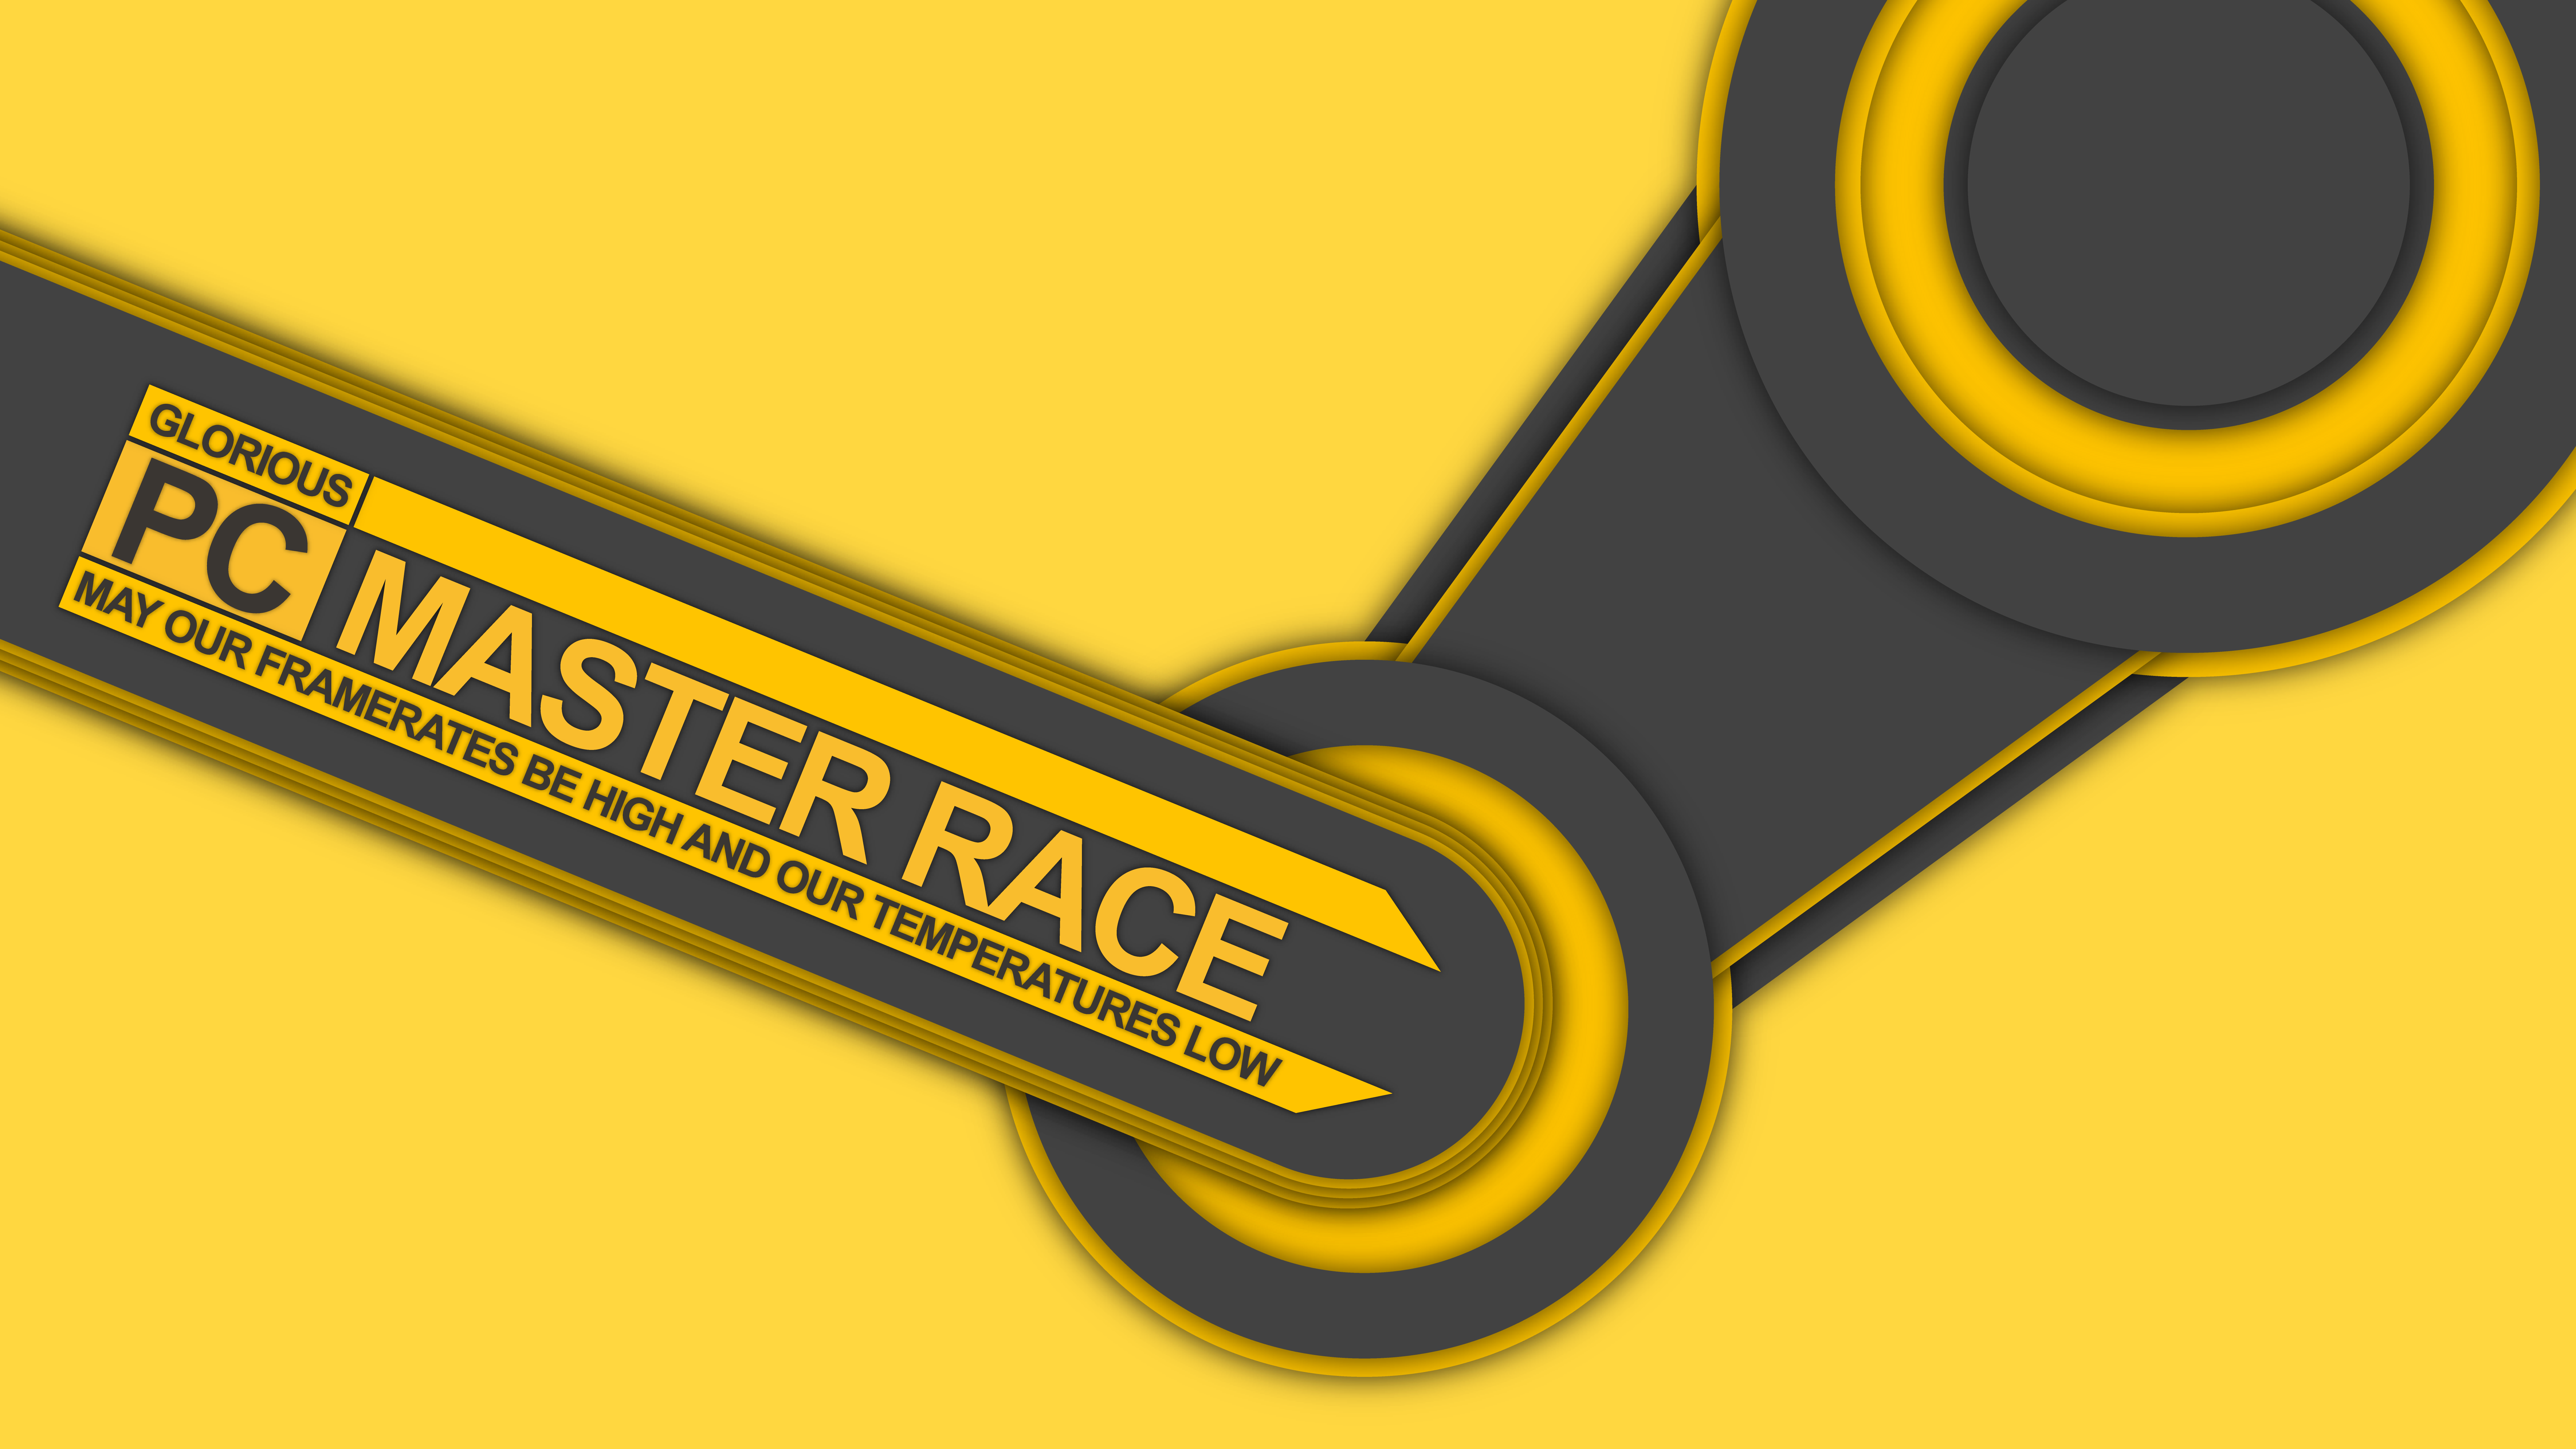 Pc Master Race 8k Ultra Hd Wallpaper Background Image